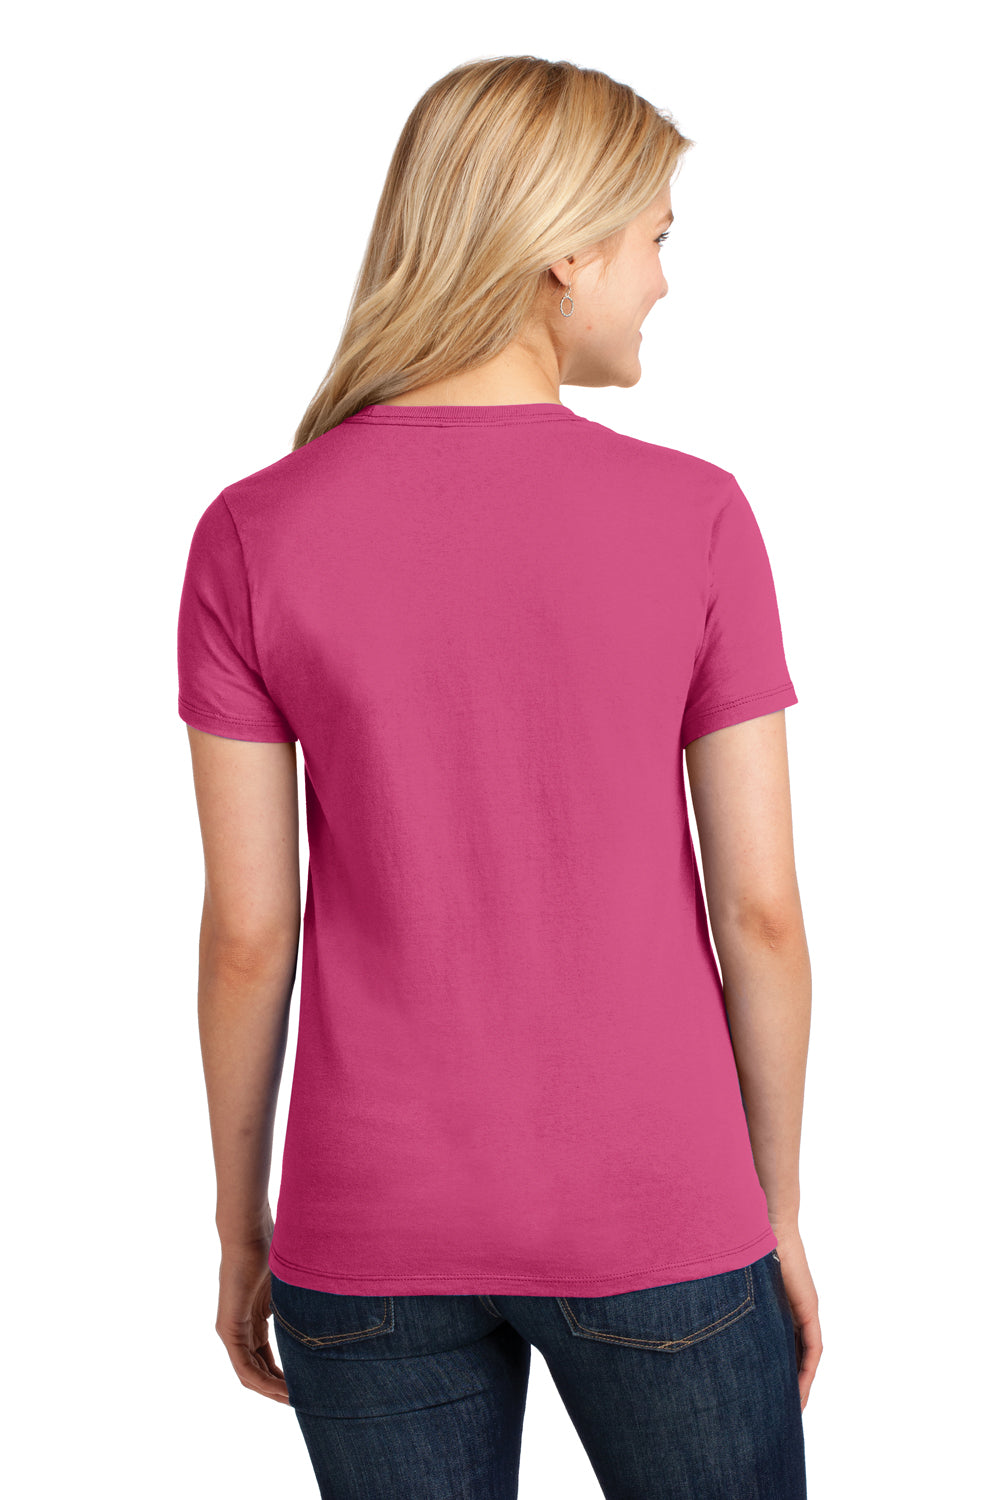 Port & Company LPC54 Womens Core Short Sleeve Crewneck T-Shirt Sangria Pink Back